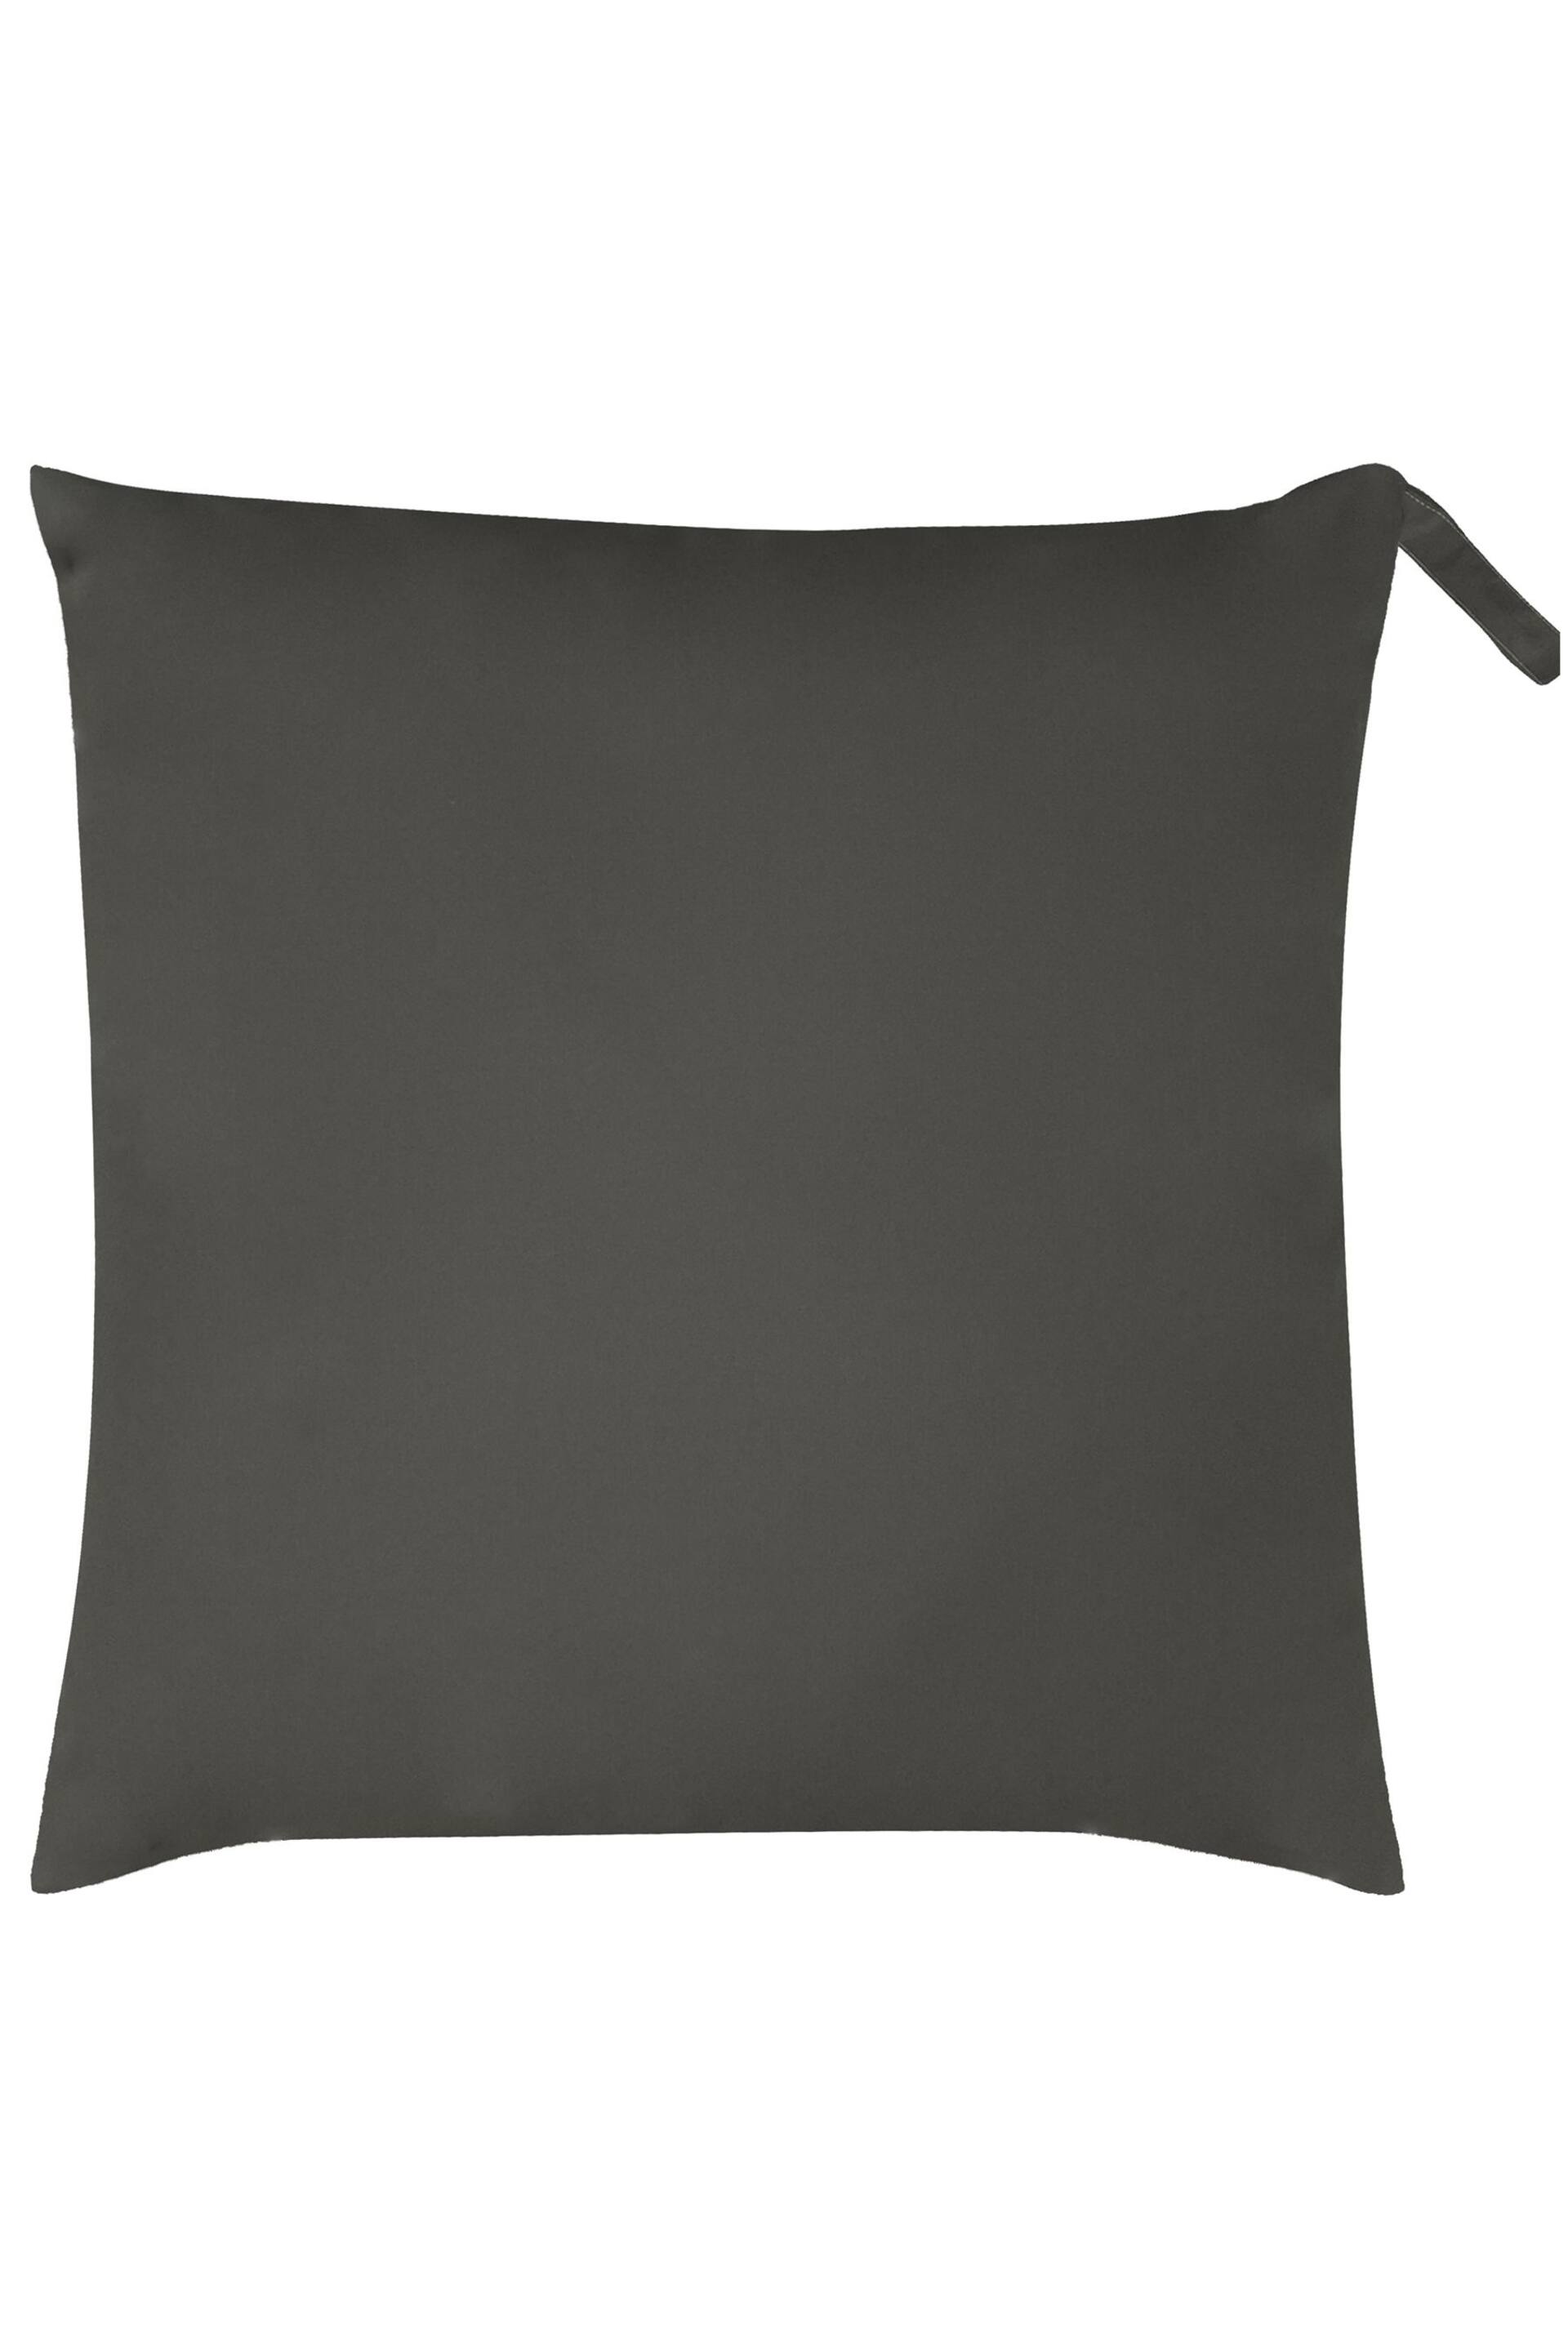 furn. Grey Plain Large Water UV Resistant Outdoor Floor Cushion - Image 1 of 3